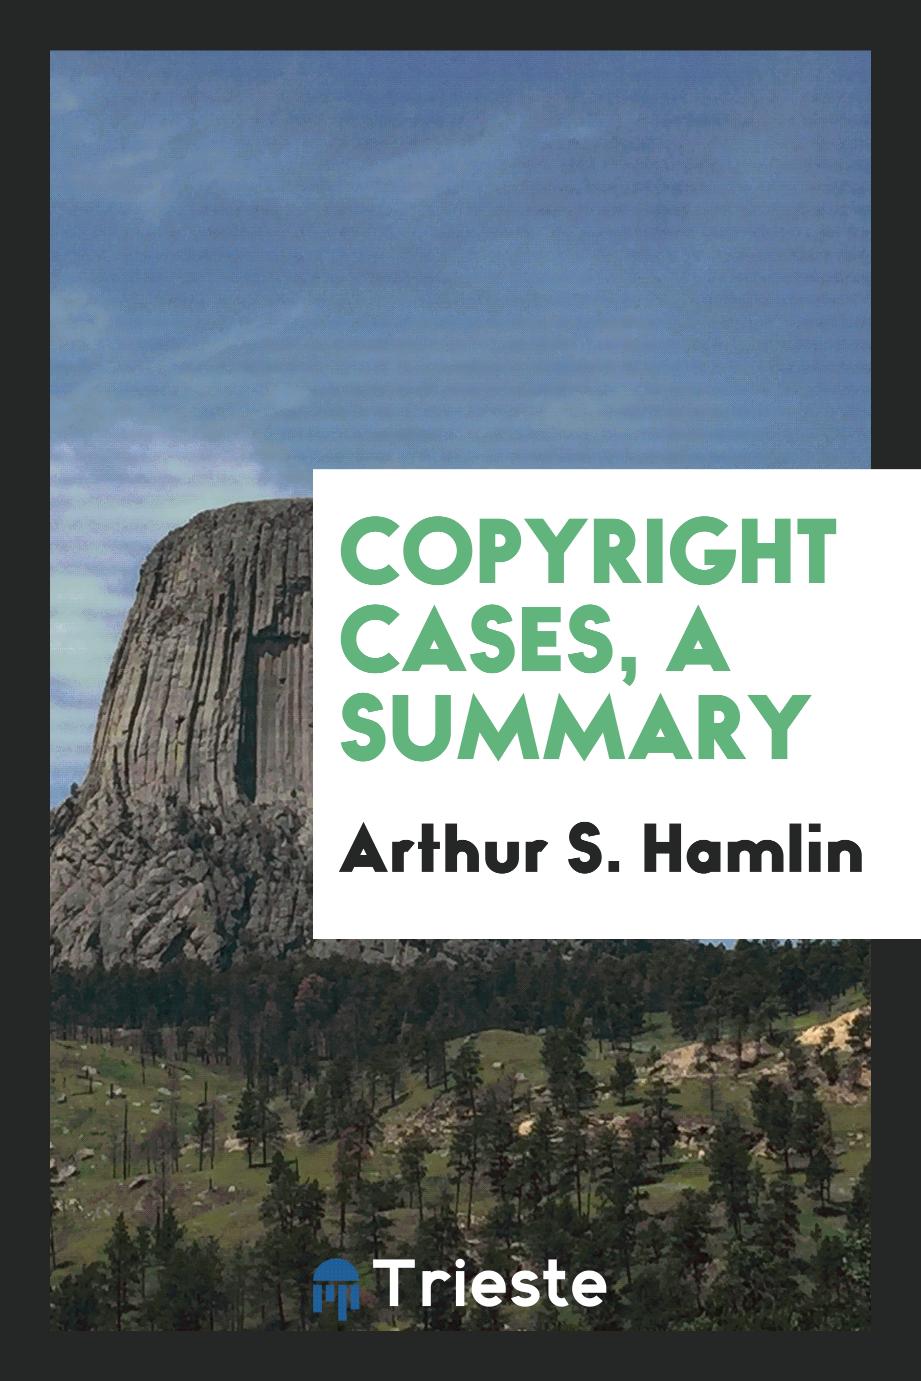 Copyright cases, a summary